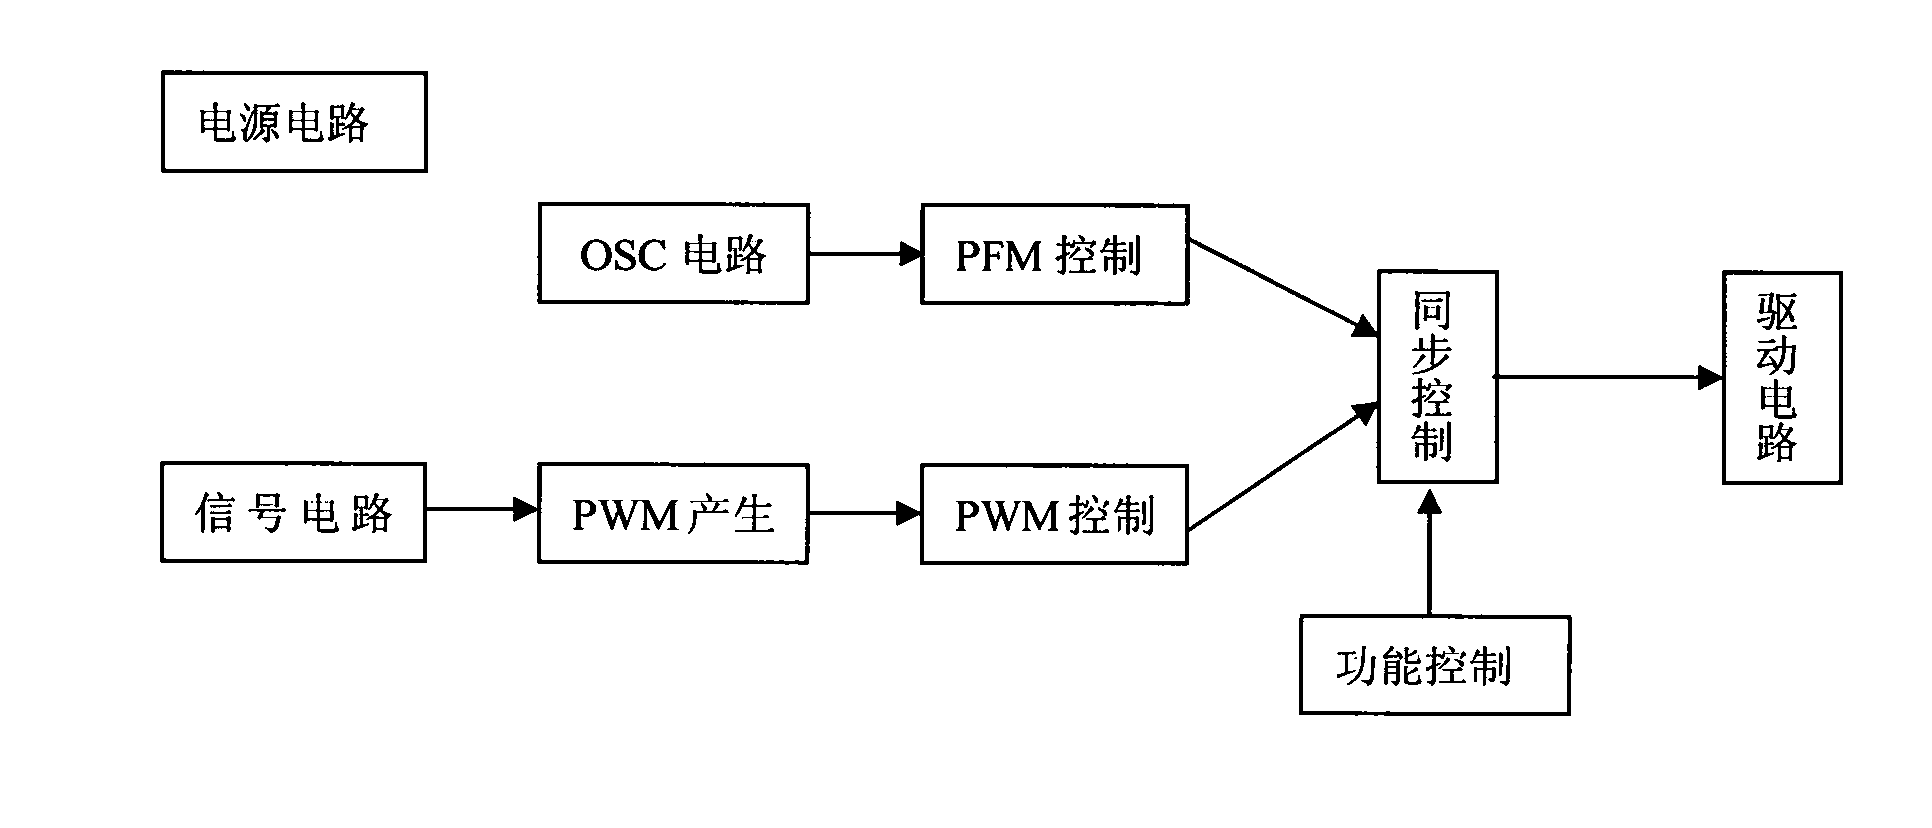 PWM/PFM synchronous control dimming circuit